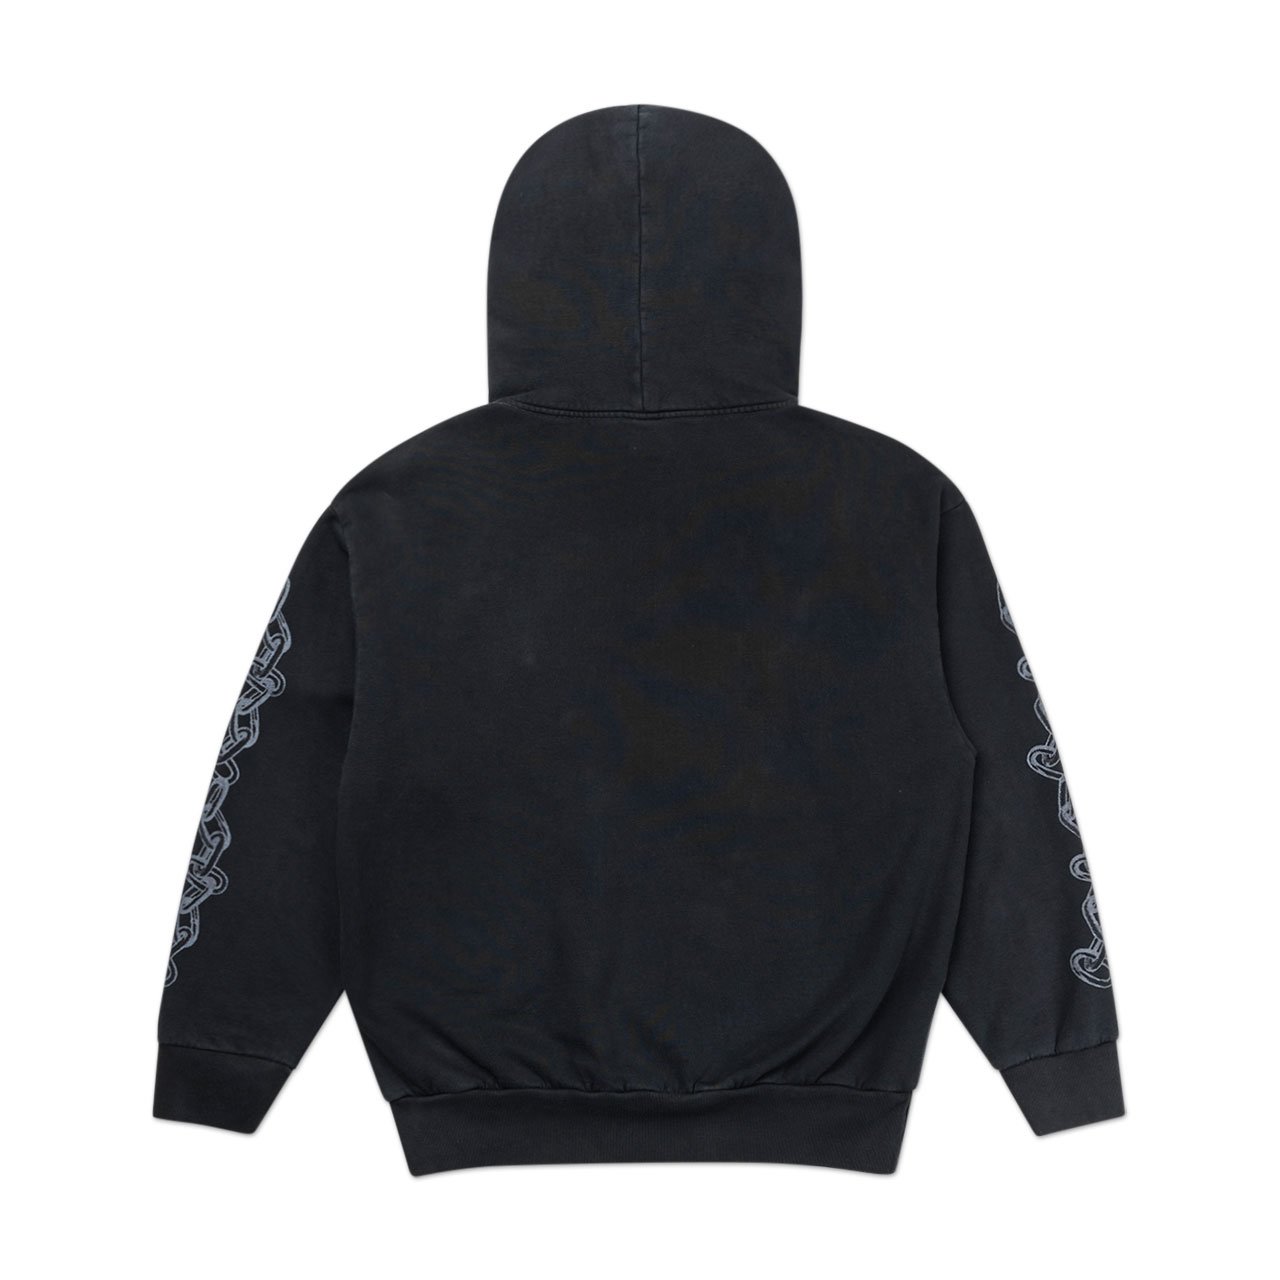 aries 2 chains hoodie (black / grey) - fqar20008-blk - a.plus - Image - 2